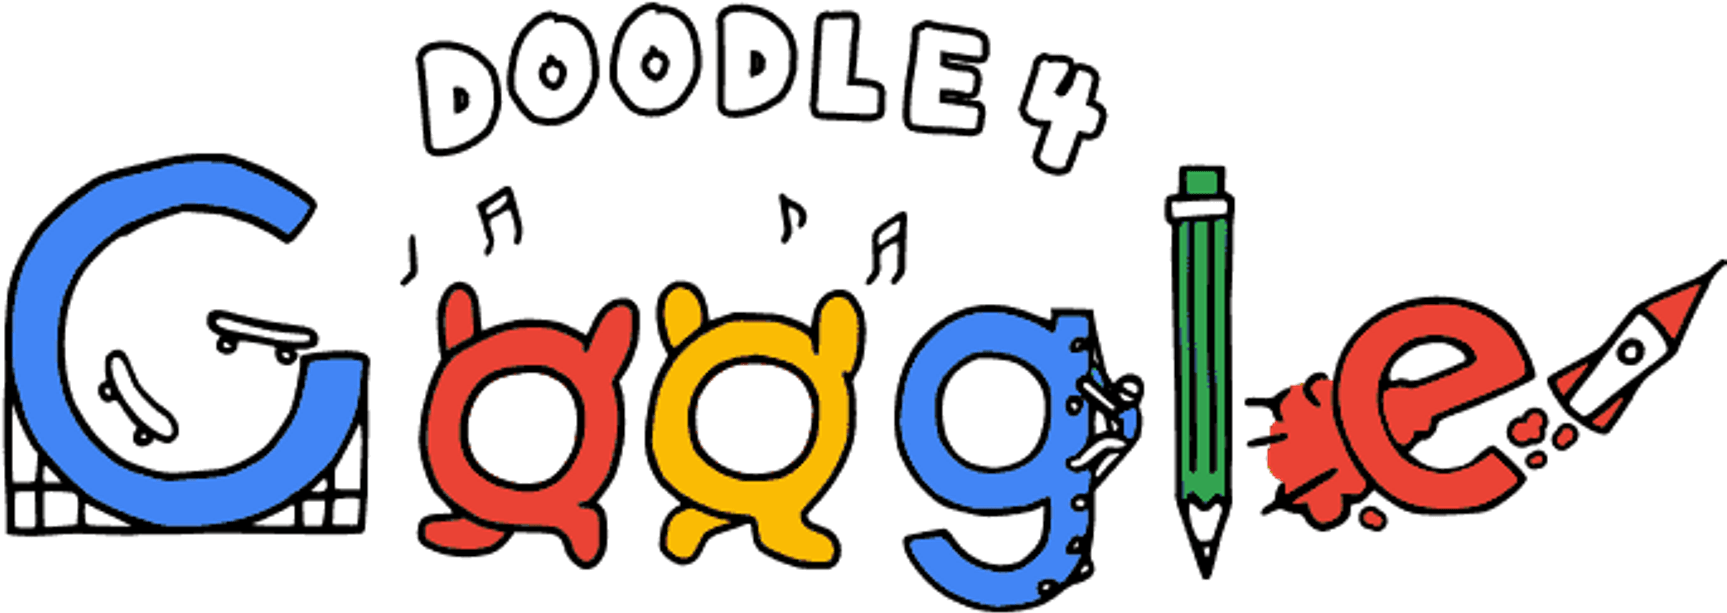 Nba Drawing Doodle - Google Doodle Winners 2018 (1903x630)